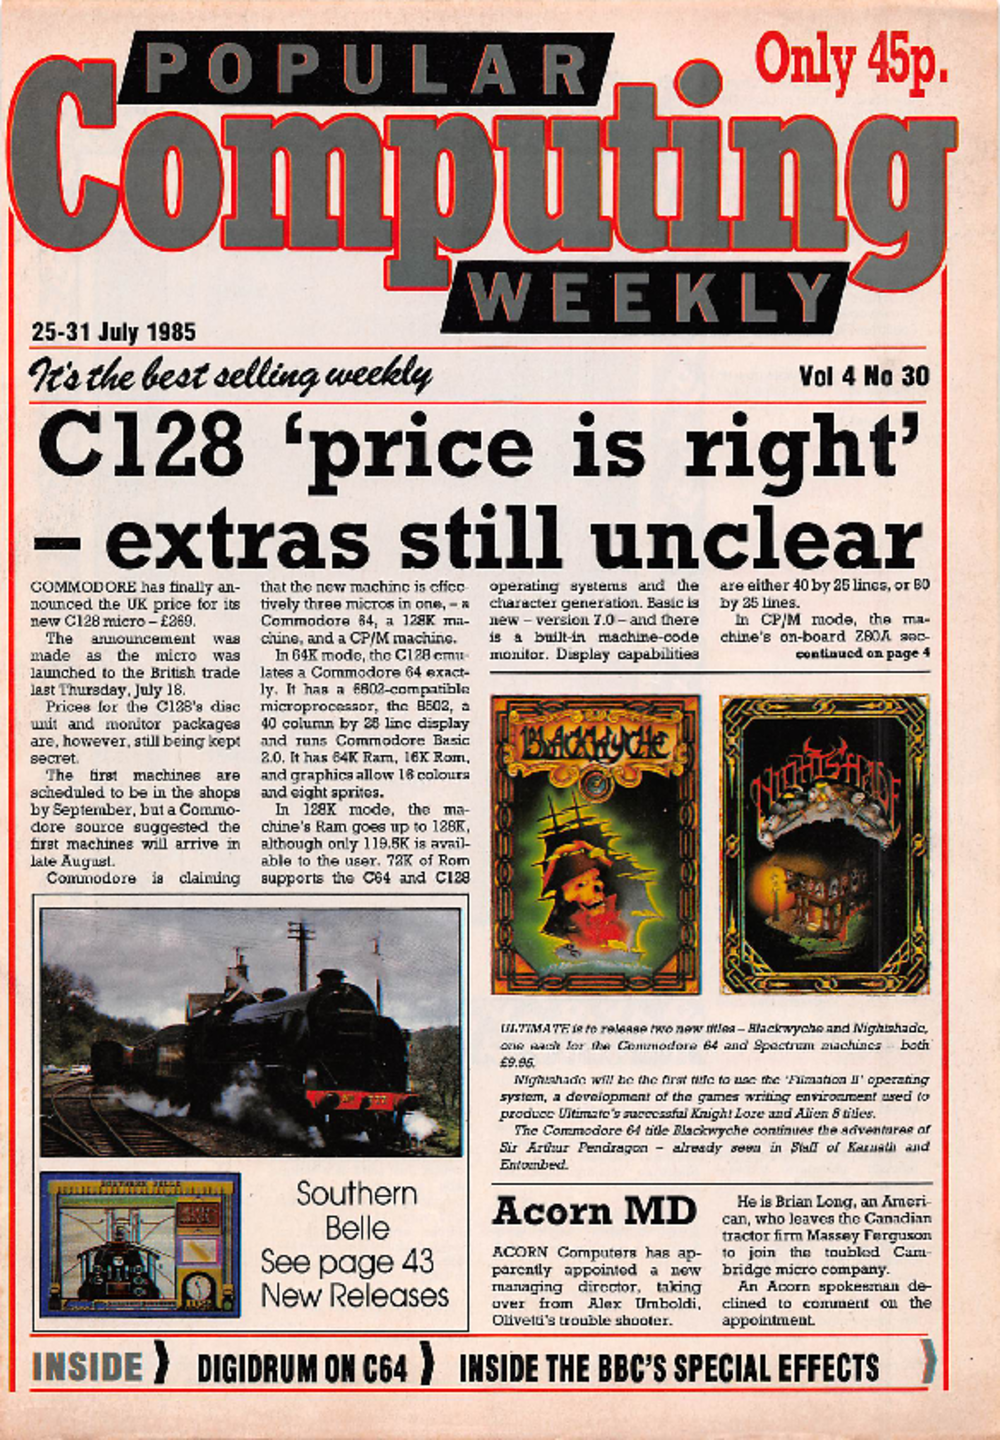 Article: Popular Computing Weekly Vol 4 No 30 - 25-31 July 1985